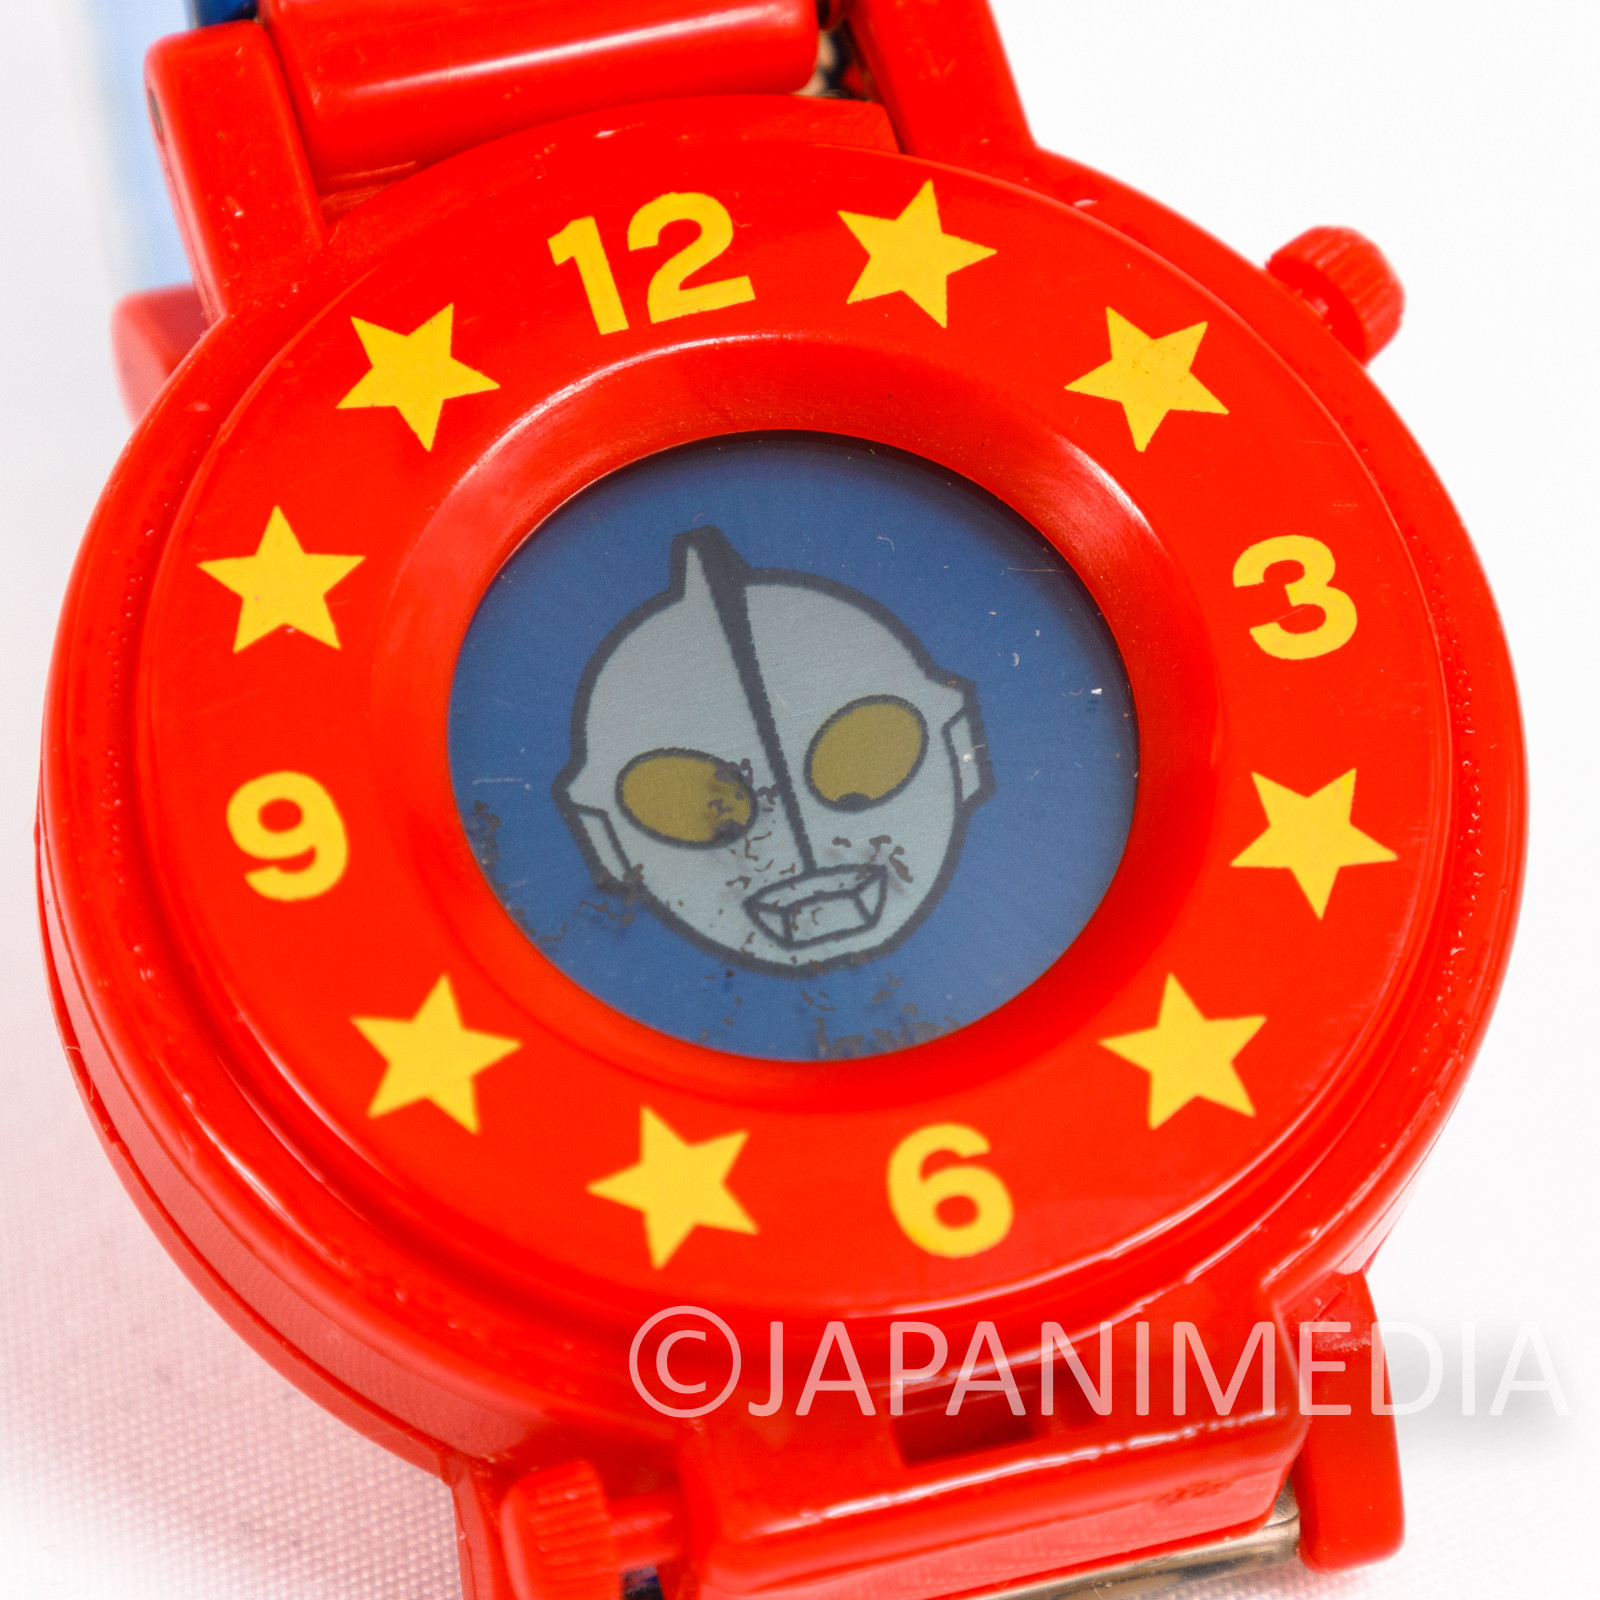 [JUNK ITEM/Damaged] Ultraman Wrist Watch Toy